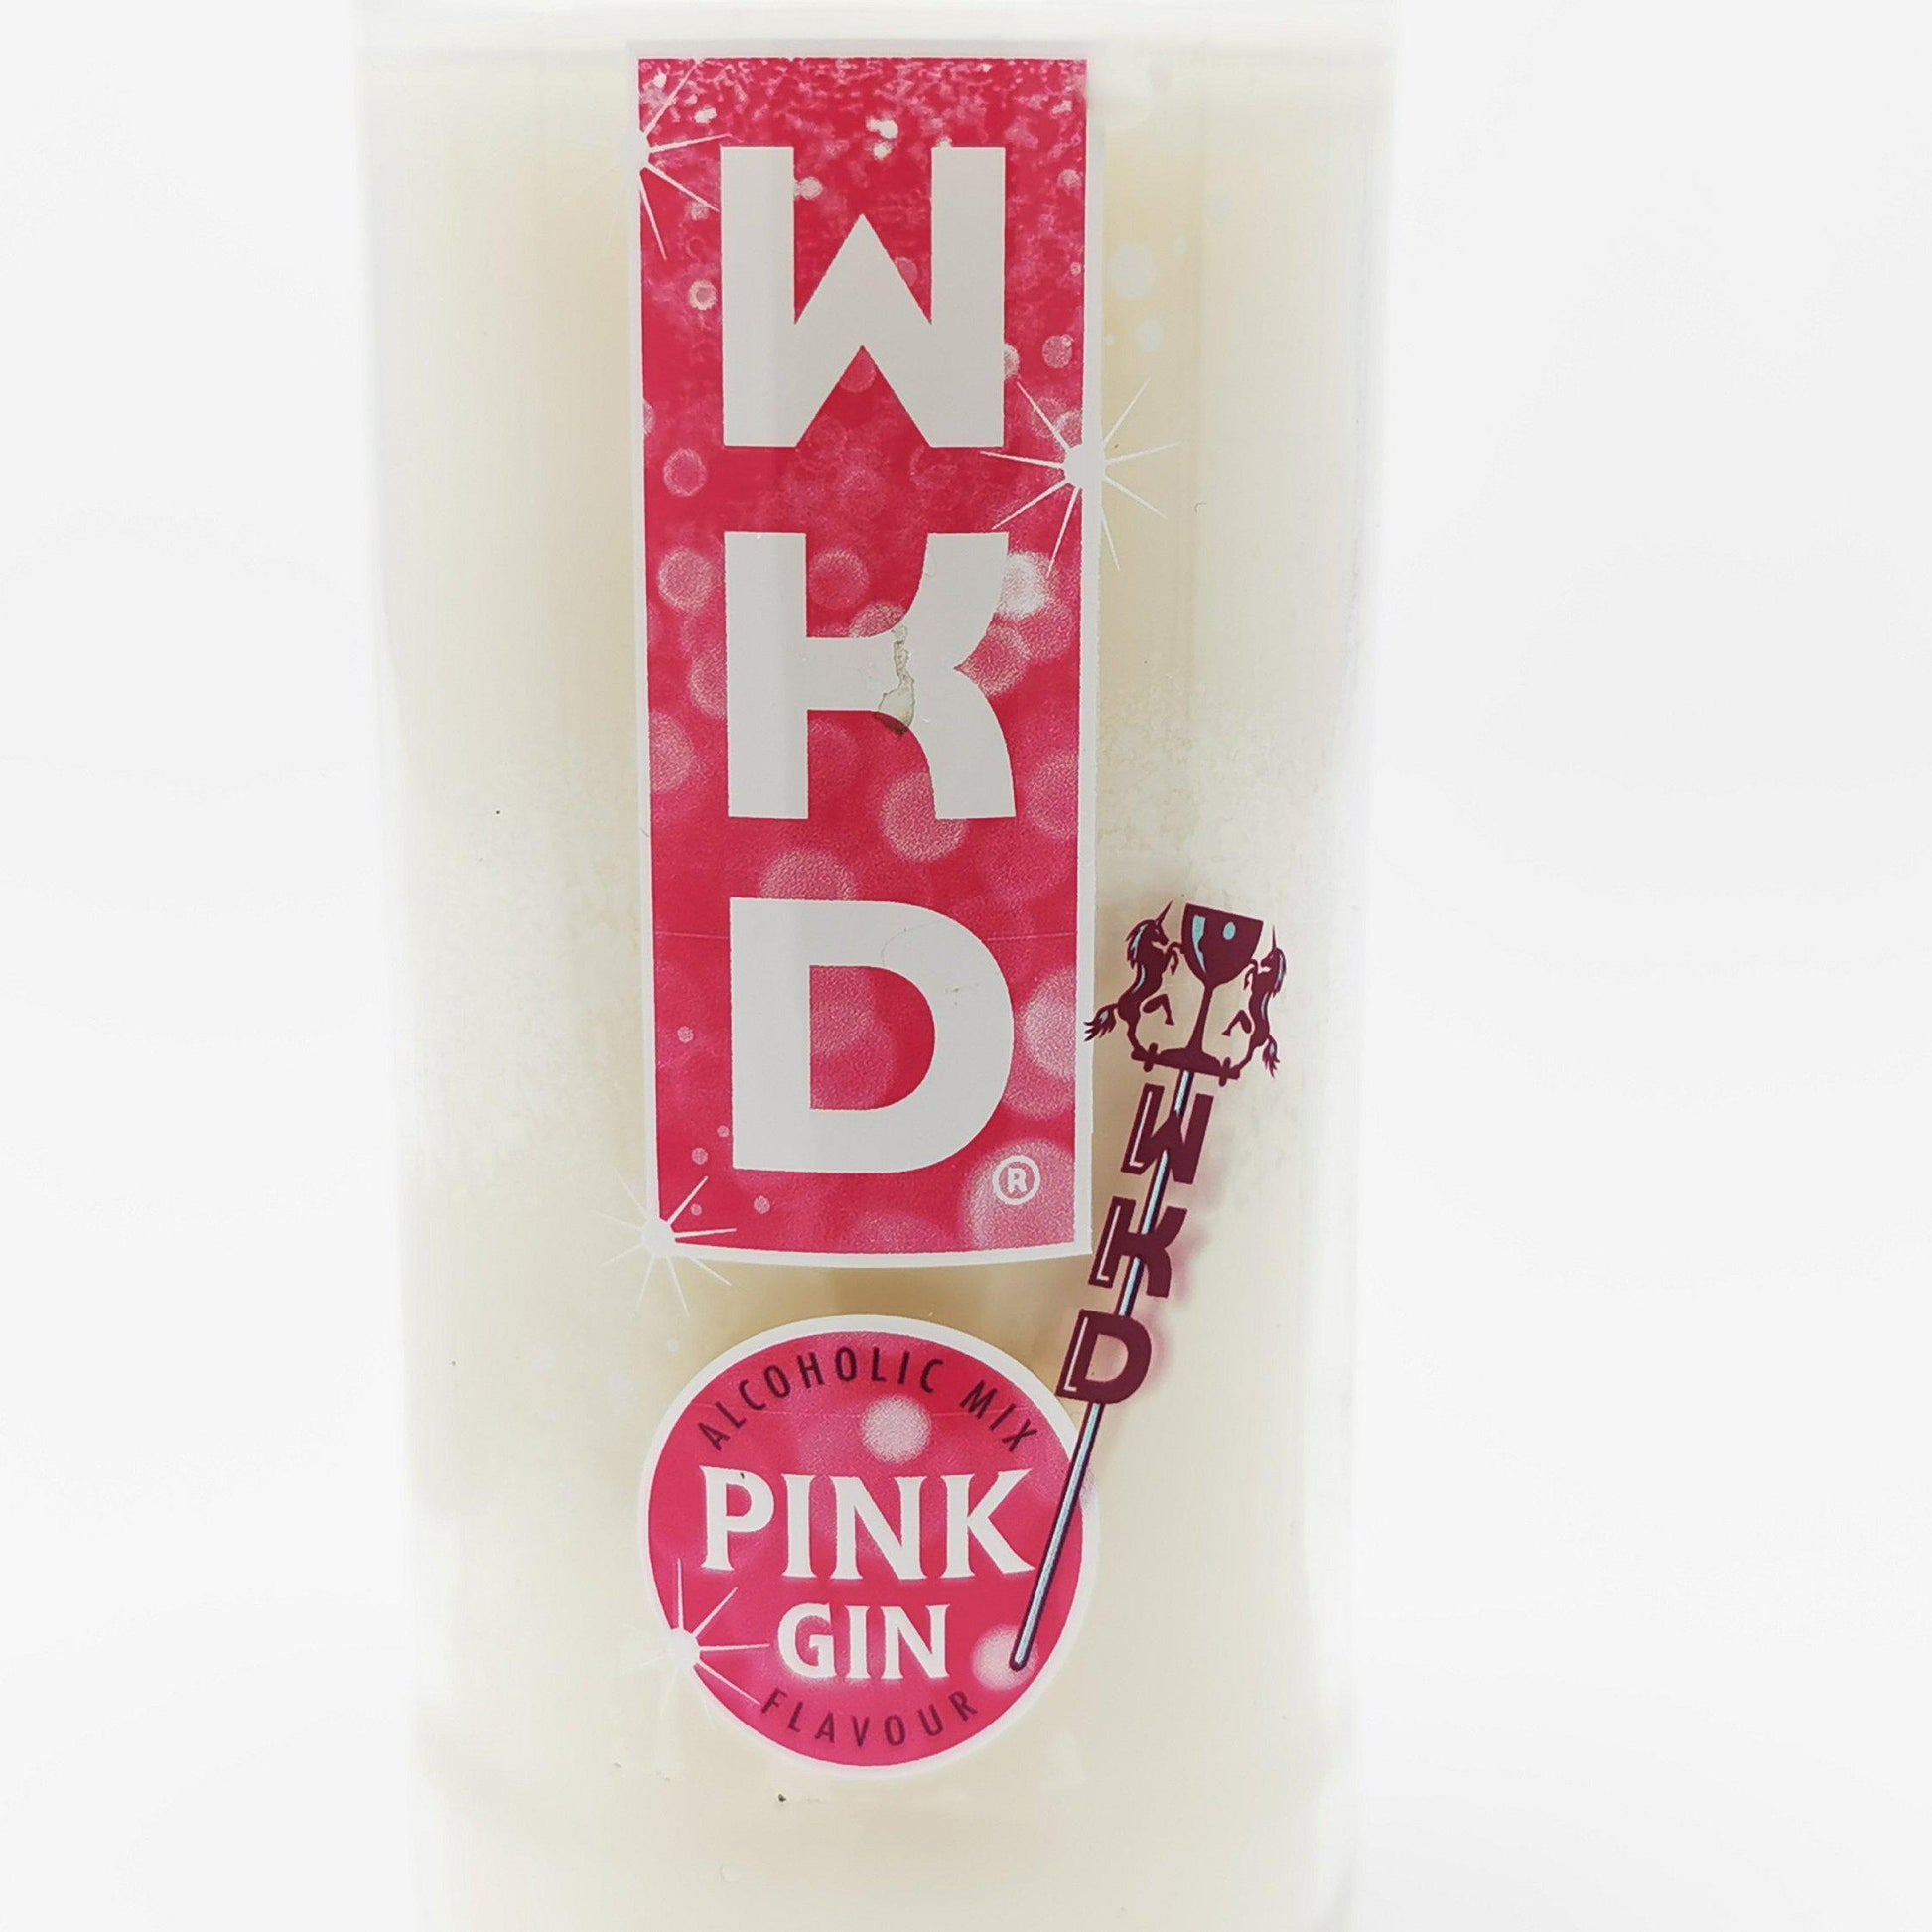 WKD Pink Gin Bottle Candle-Gin Bottle Candles-Adhock Homeware